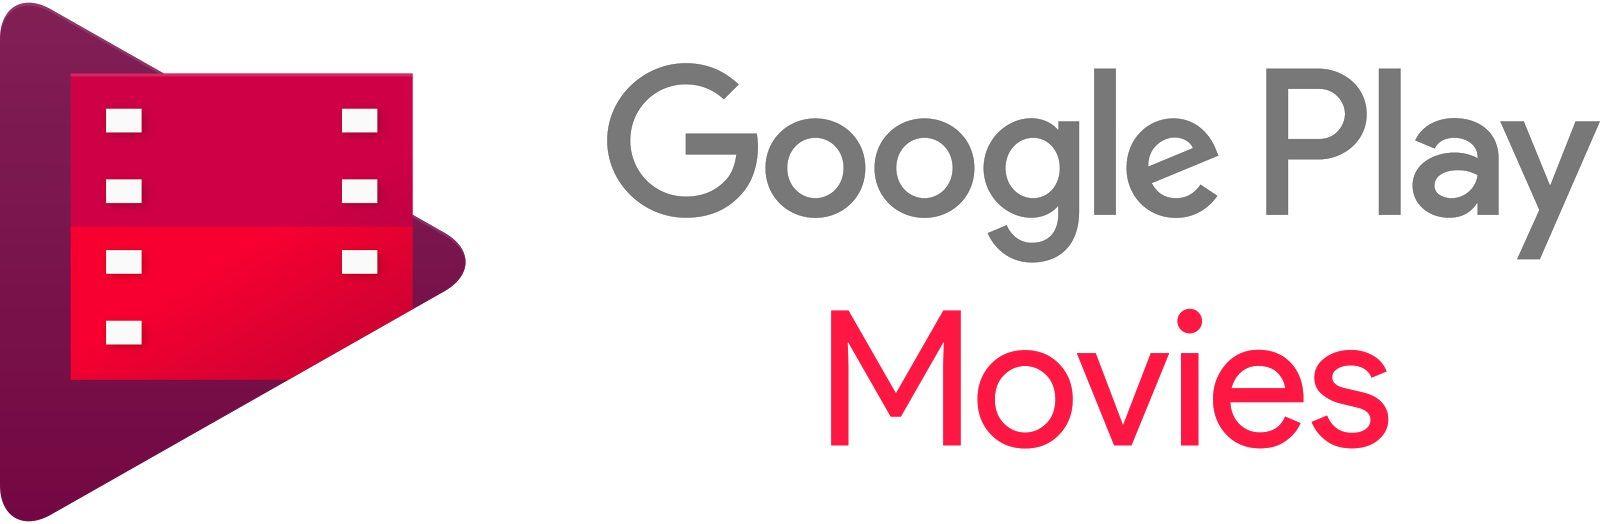 Google Play Movie Logo - Select Google Play Accounts: One Digital Movie Rental - Slickdeals.net